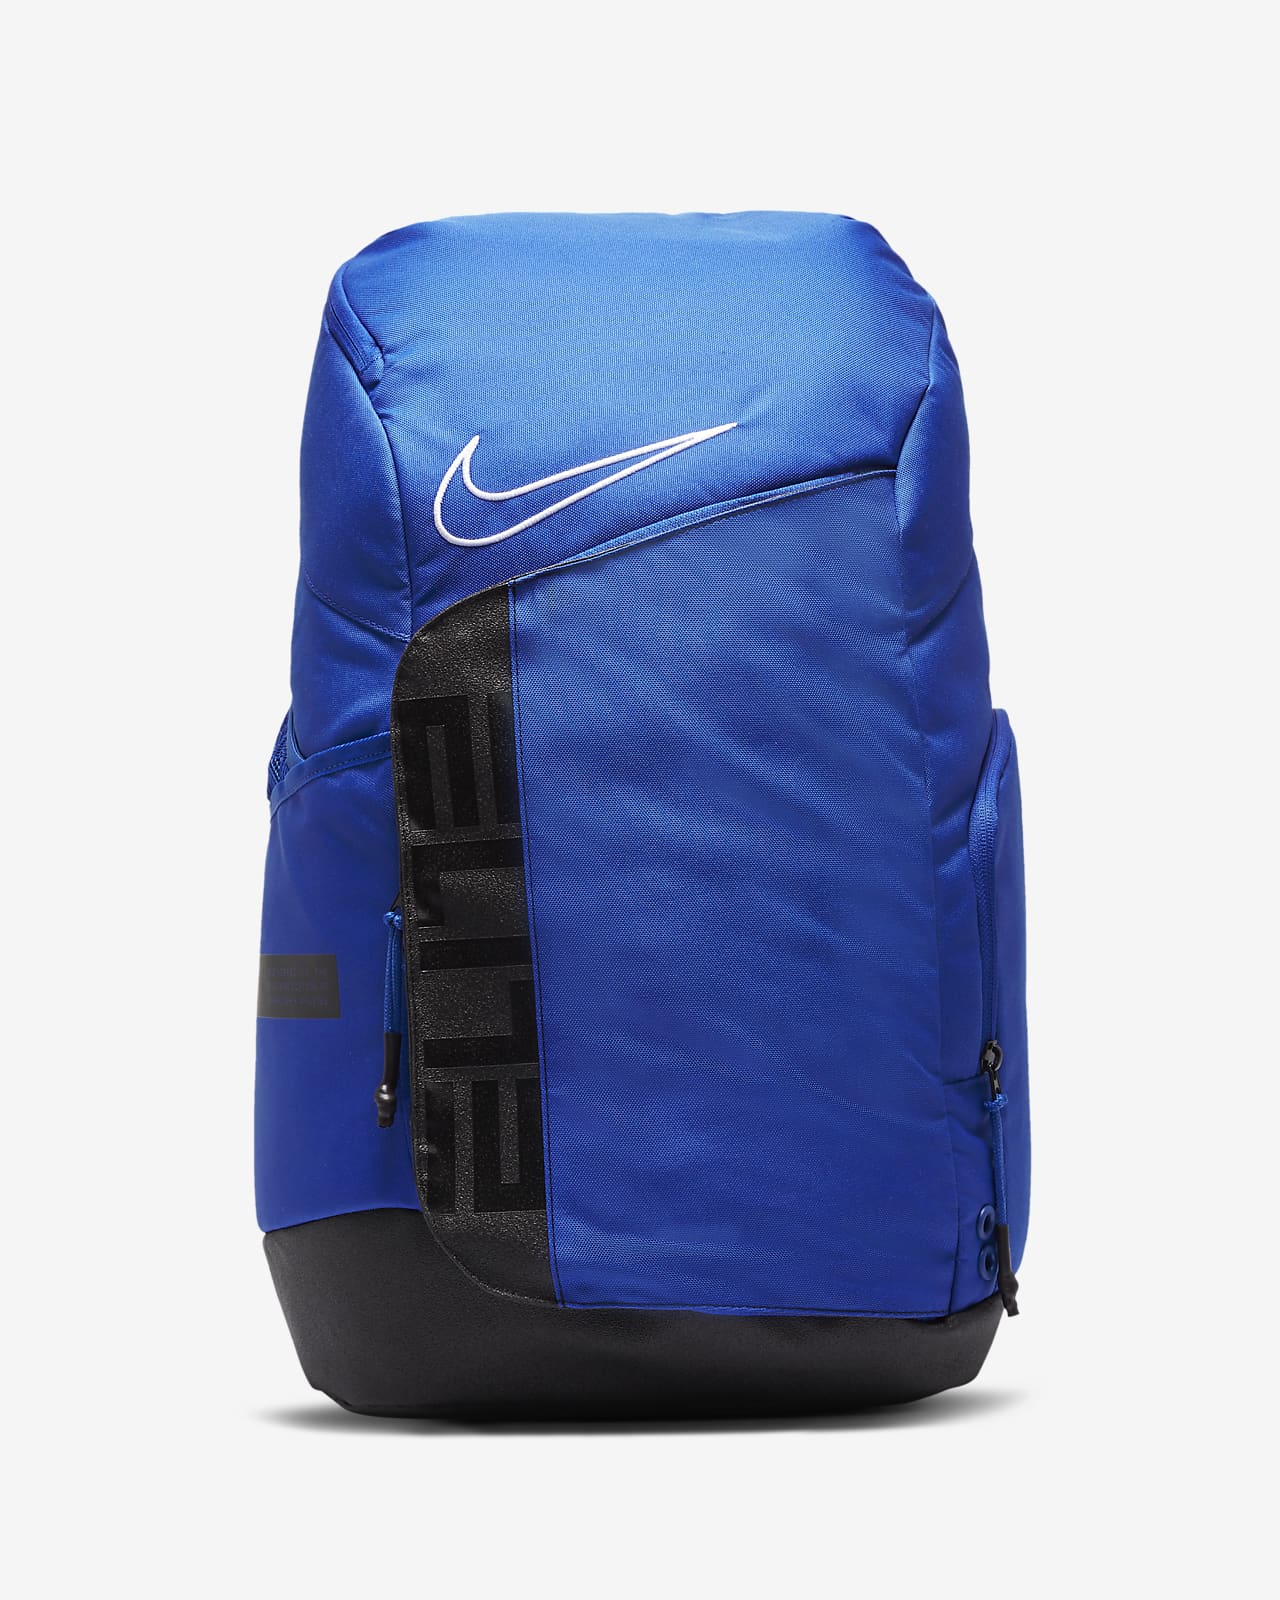 nike pro basketball backpack